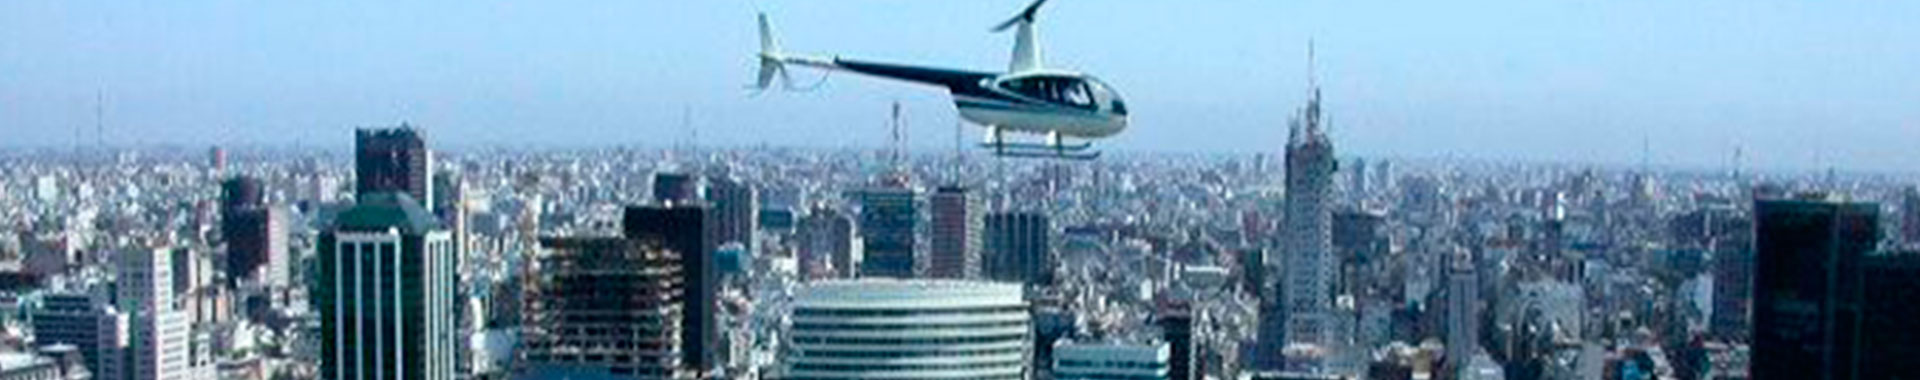 Argentina - Buenos Aires - Paseos - Helicoptero